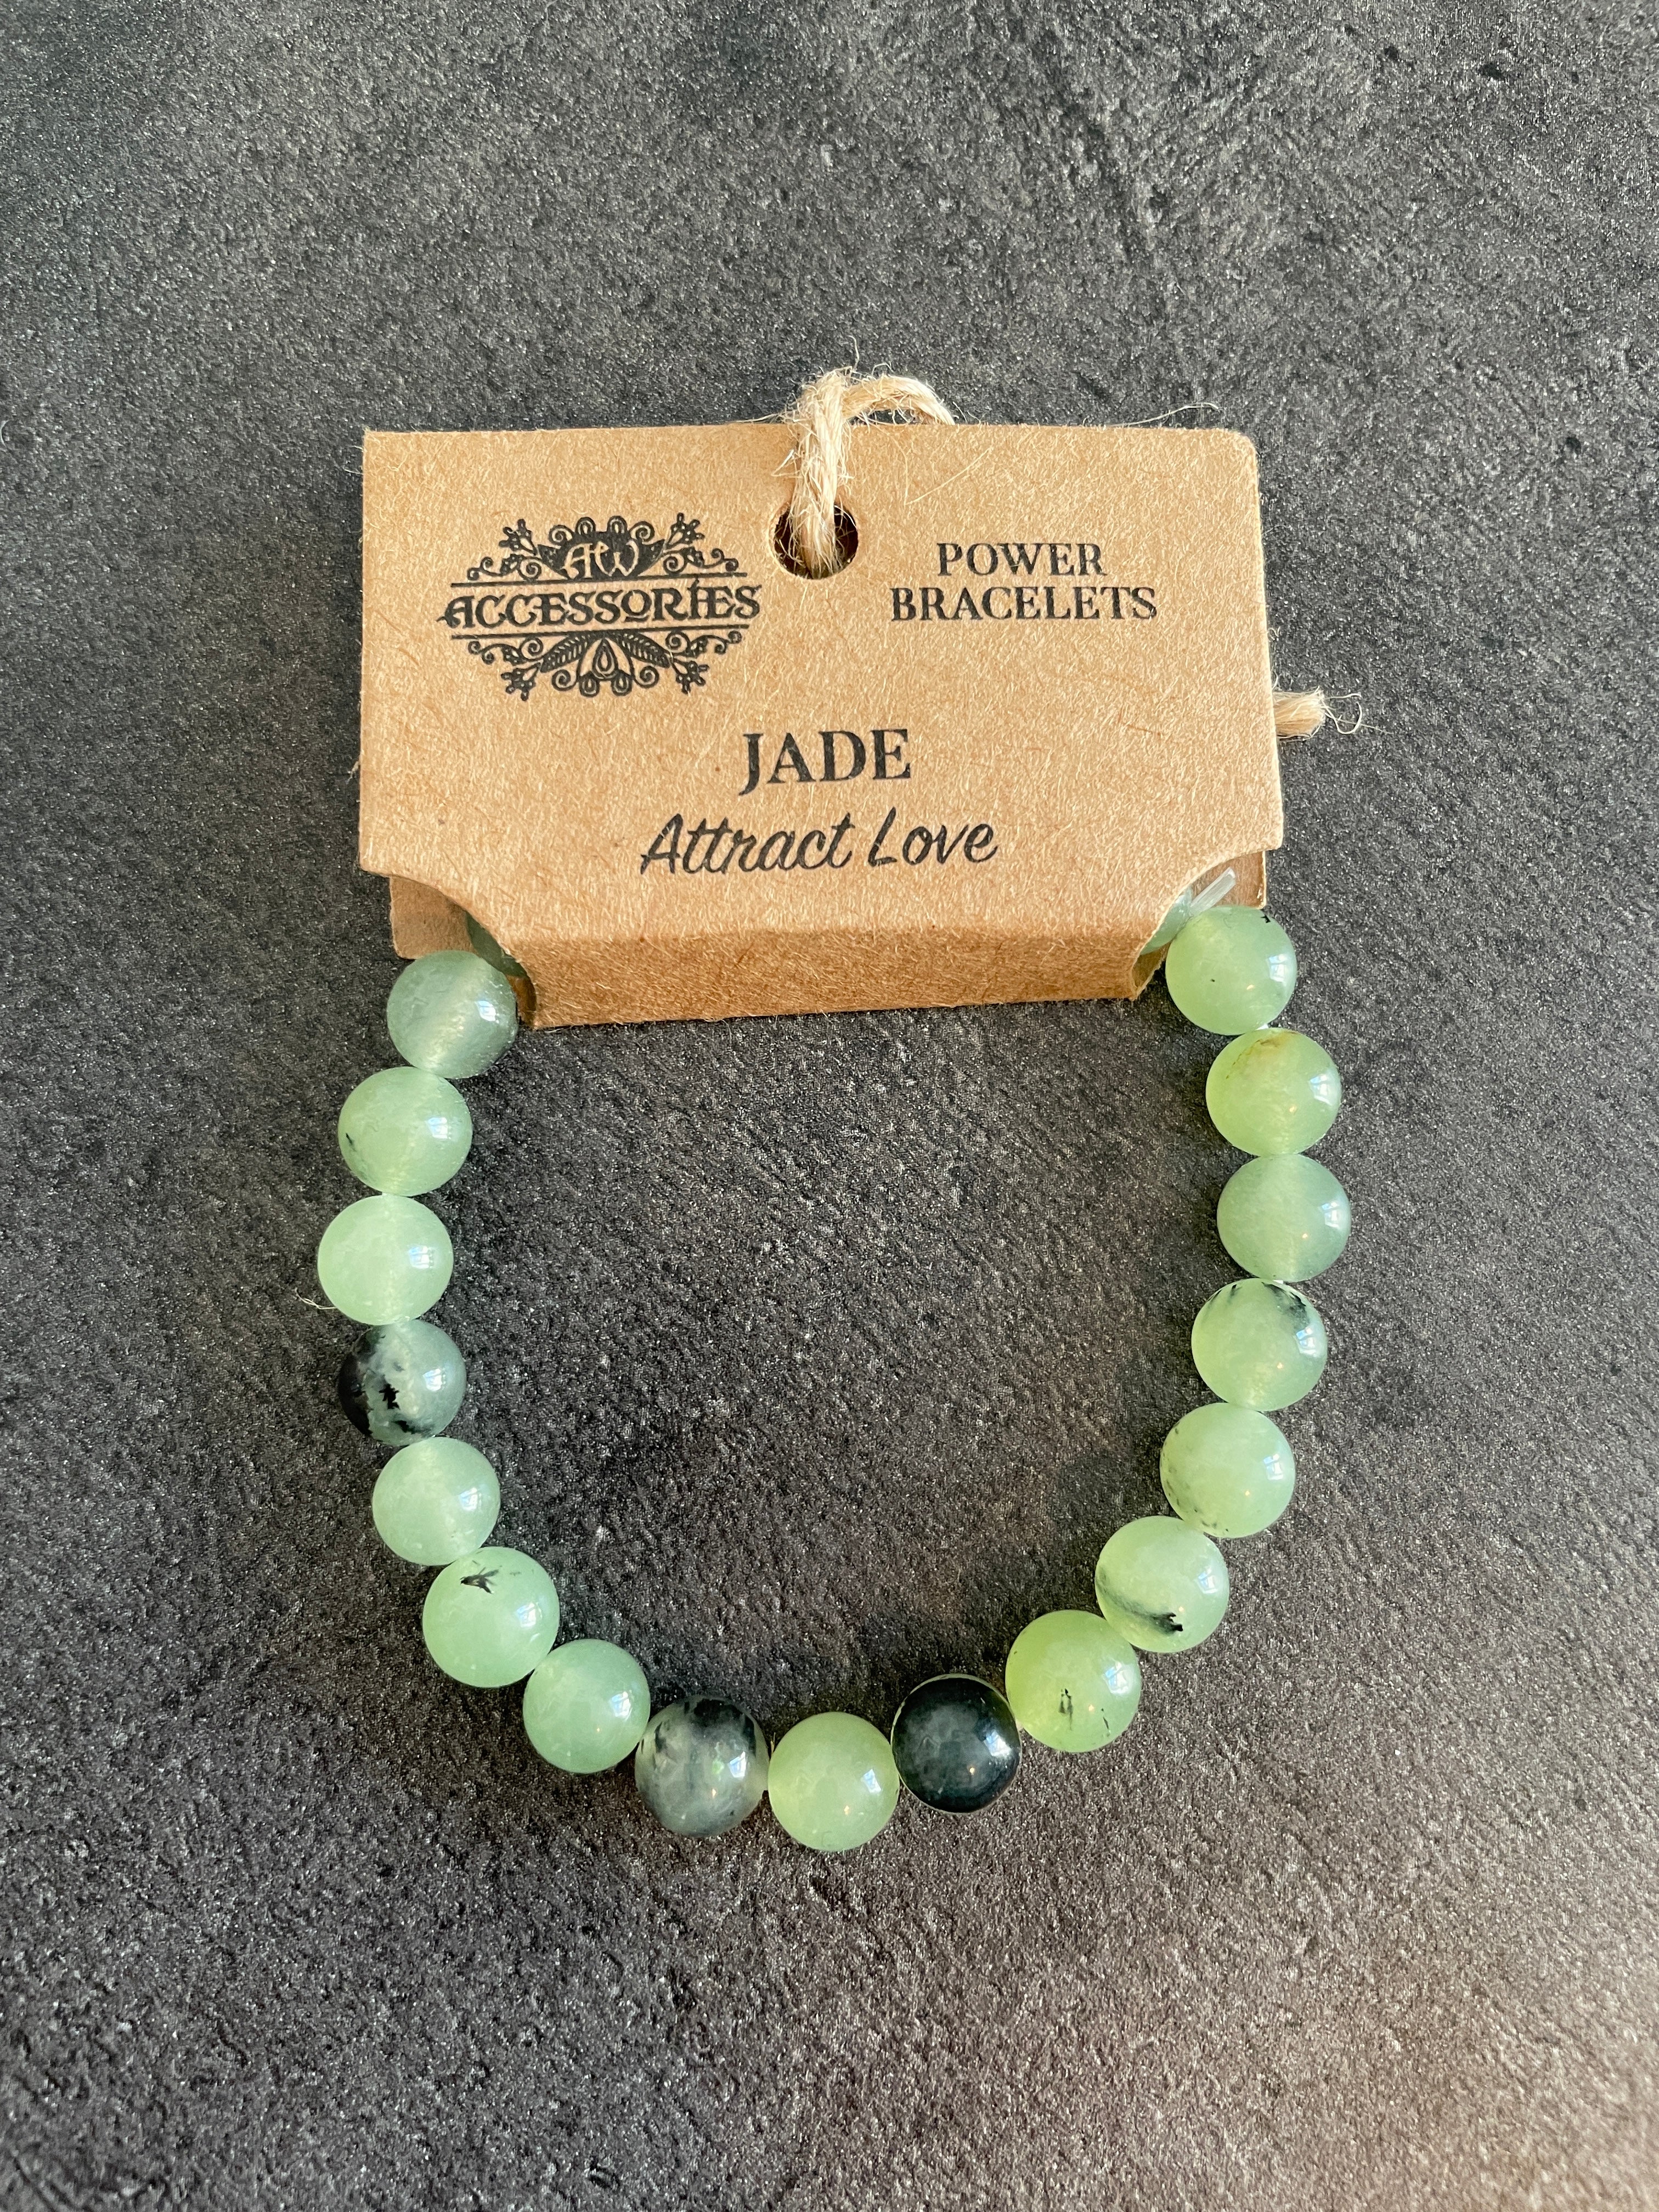 Jade - Attract love - Power bead bracelet